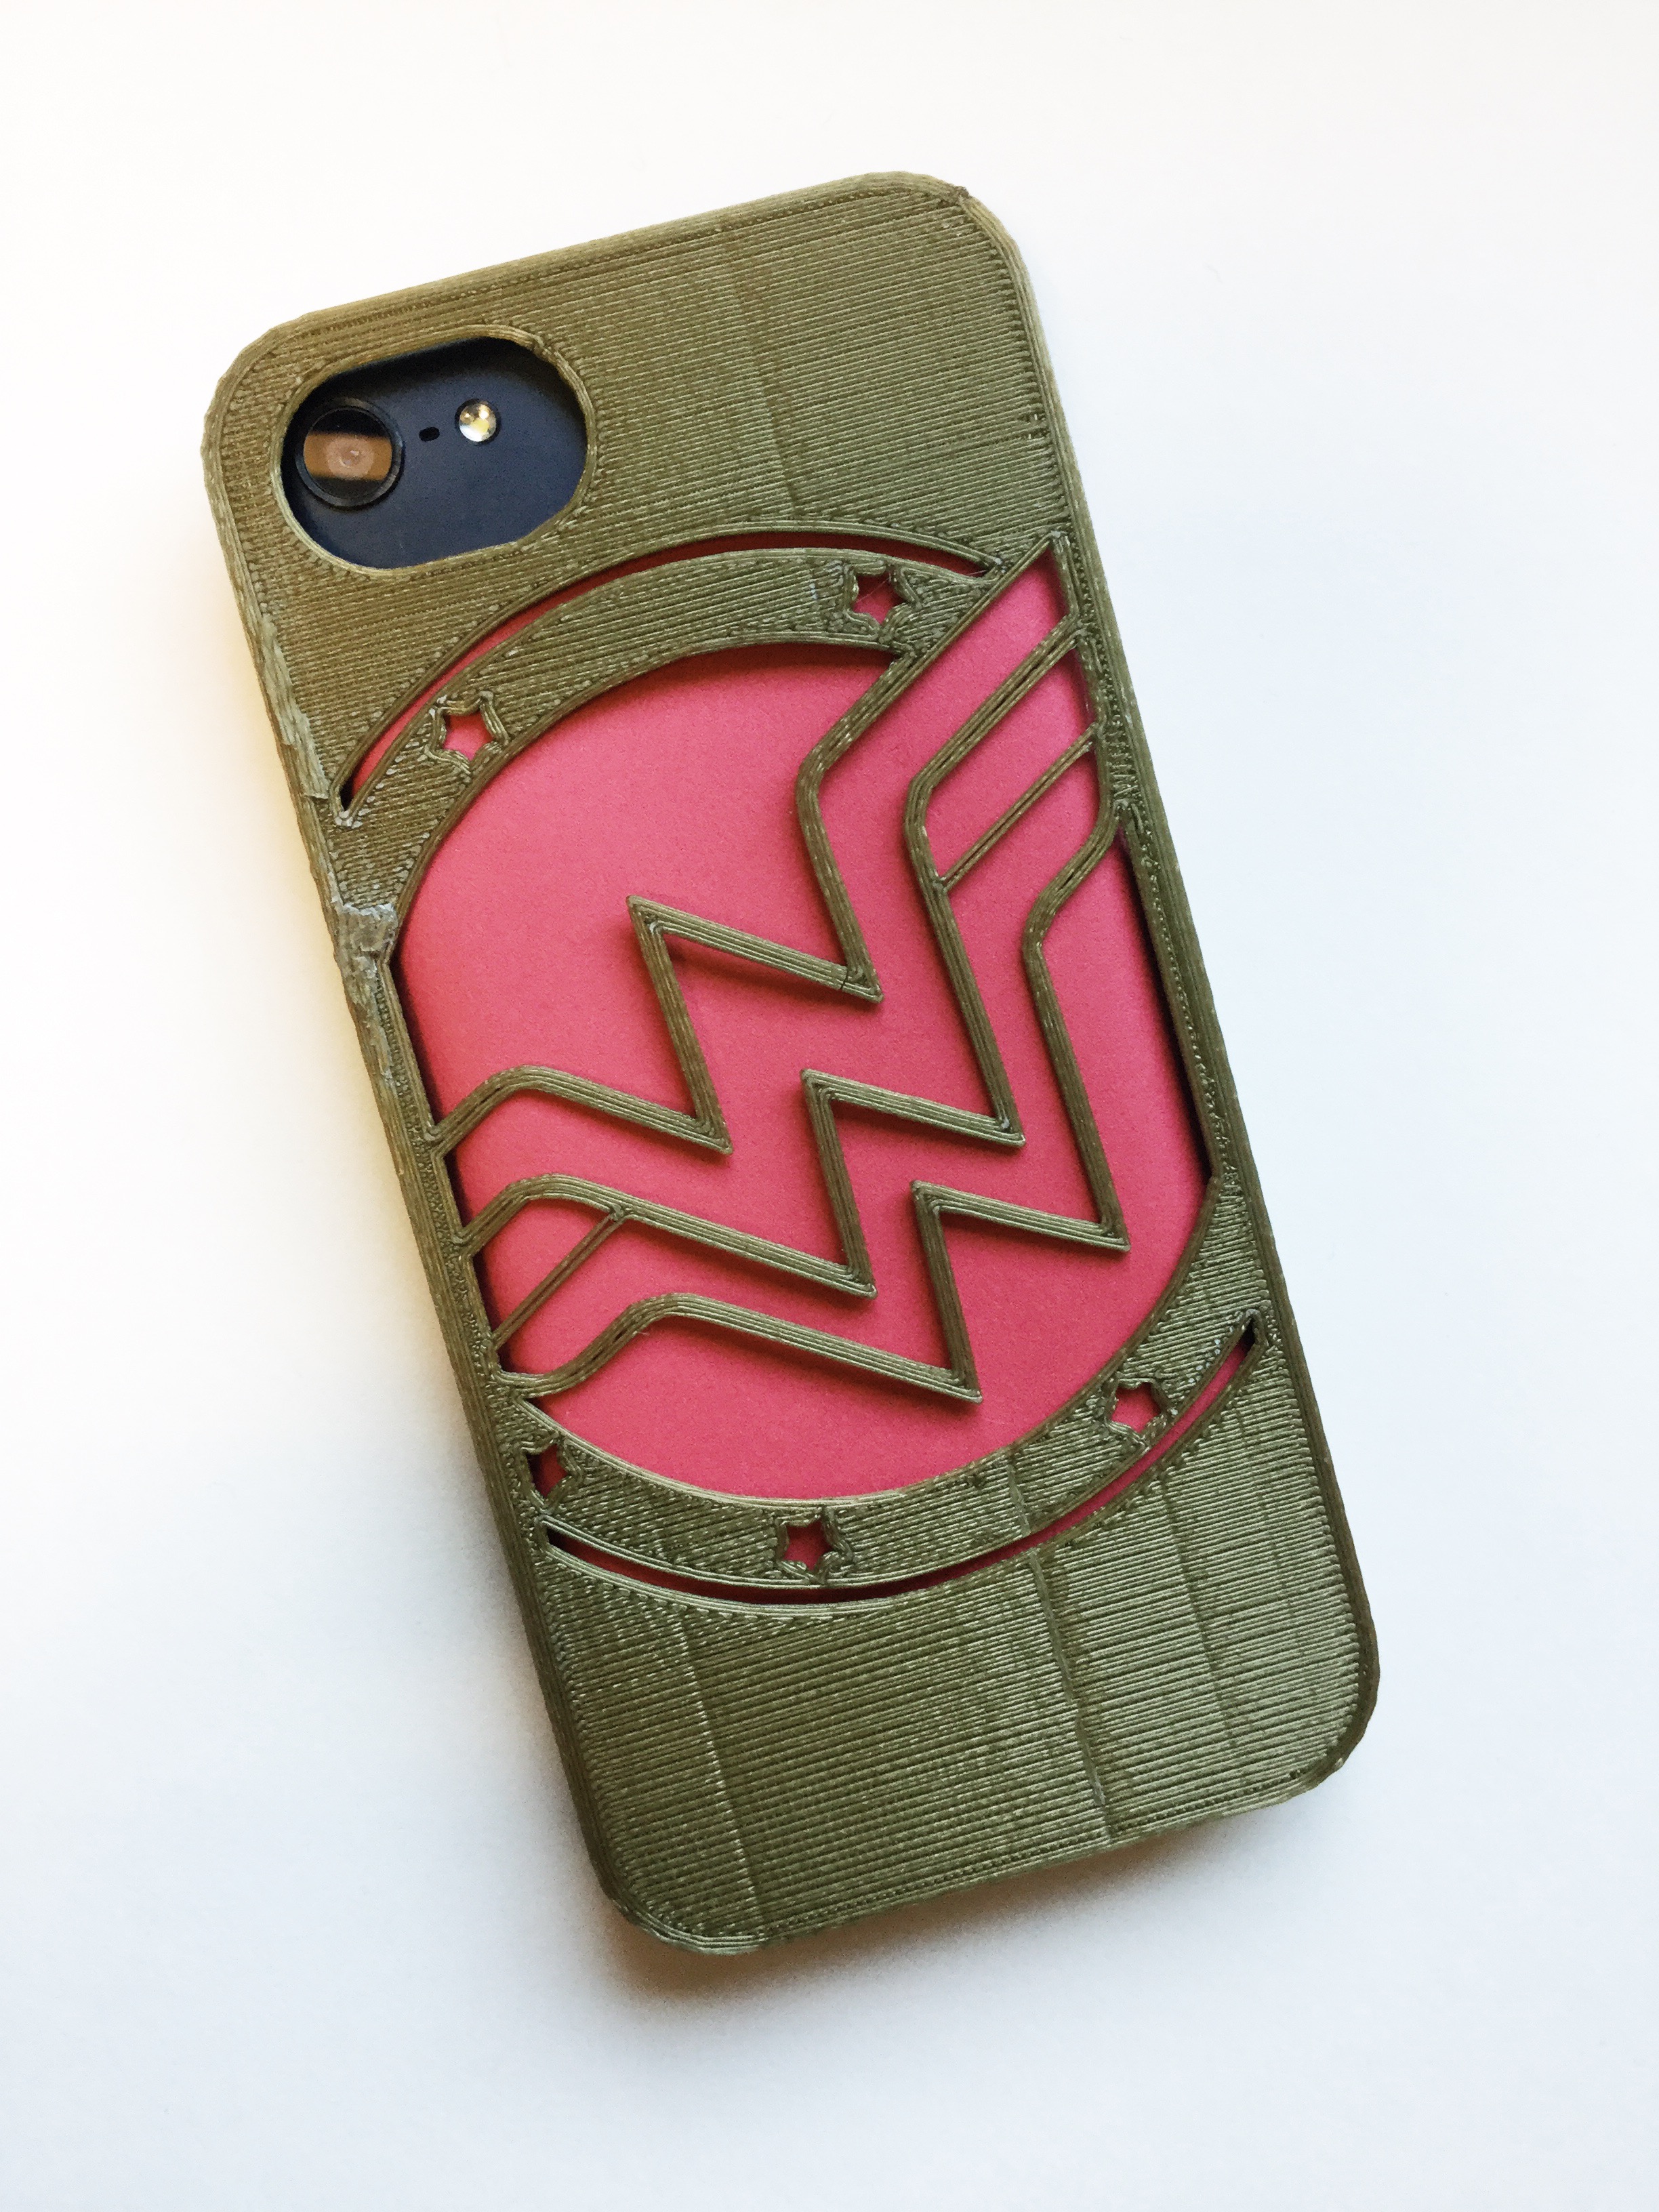 Wonder Woman phone case